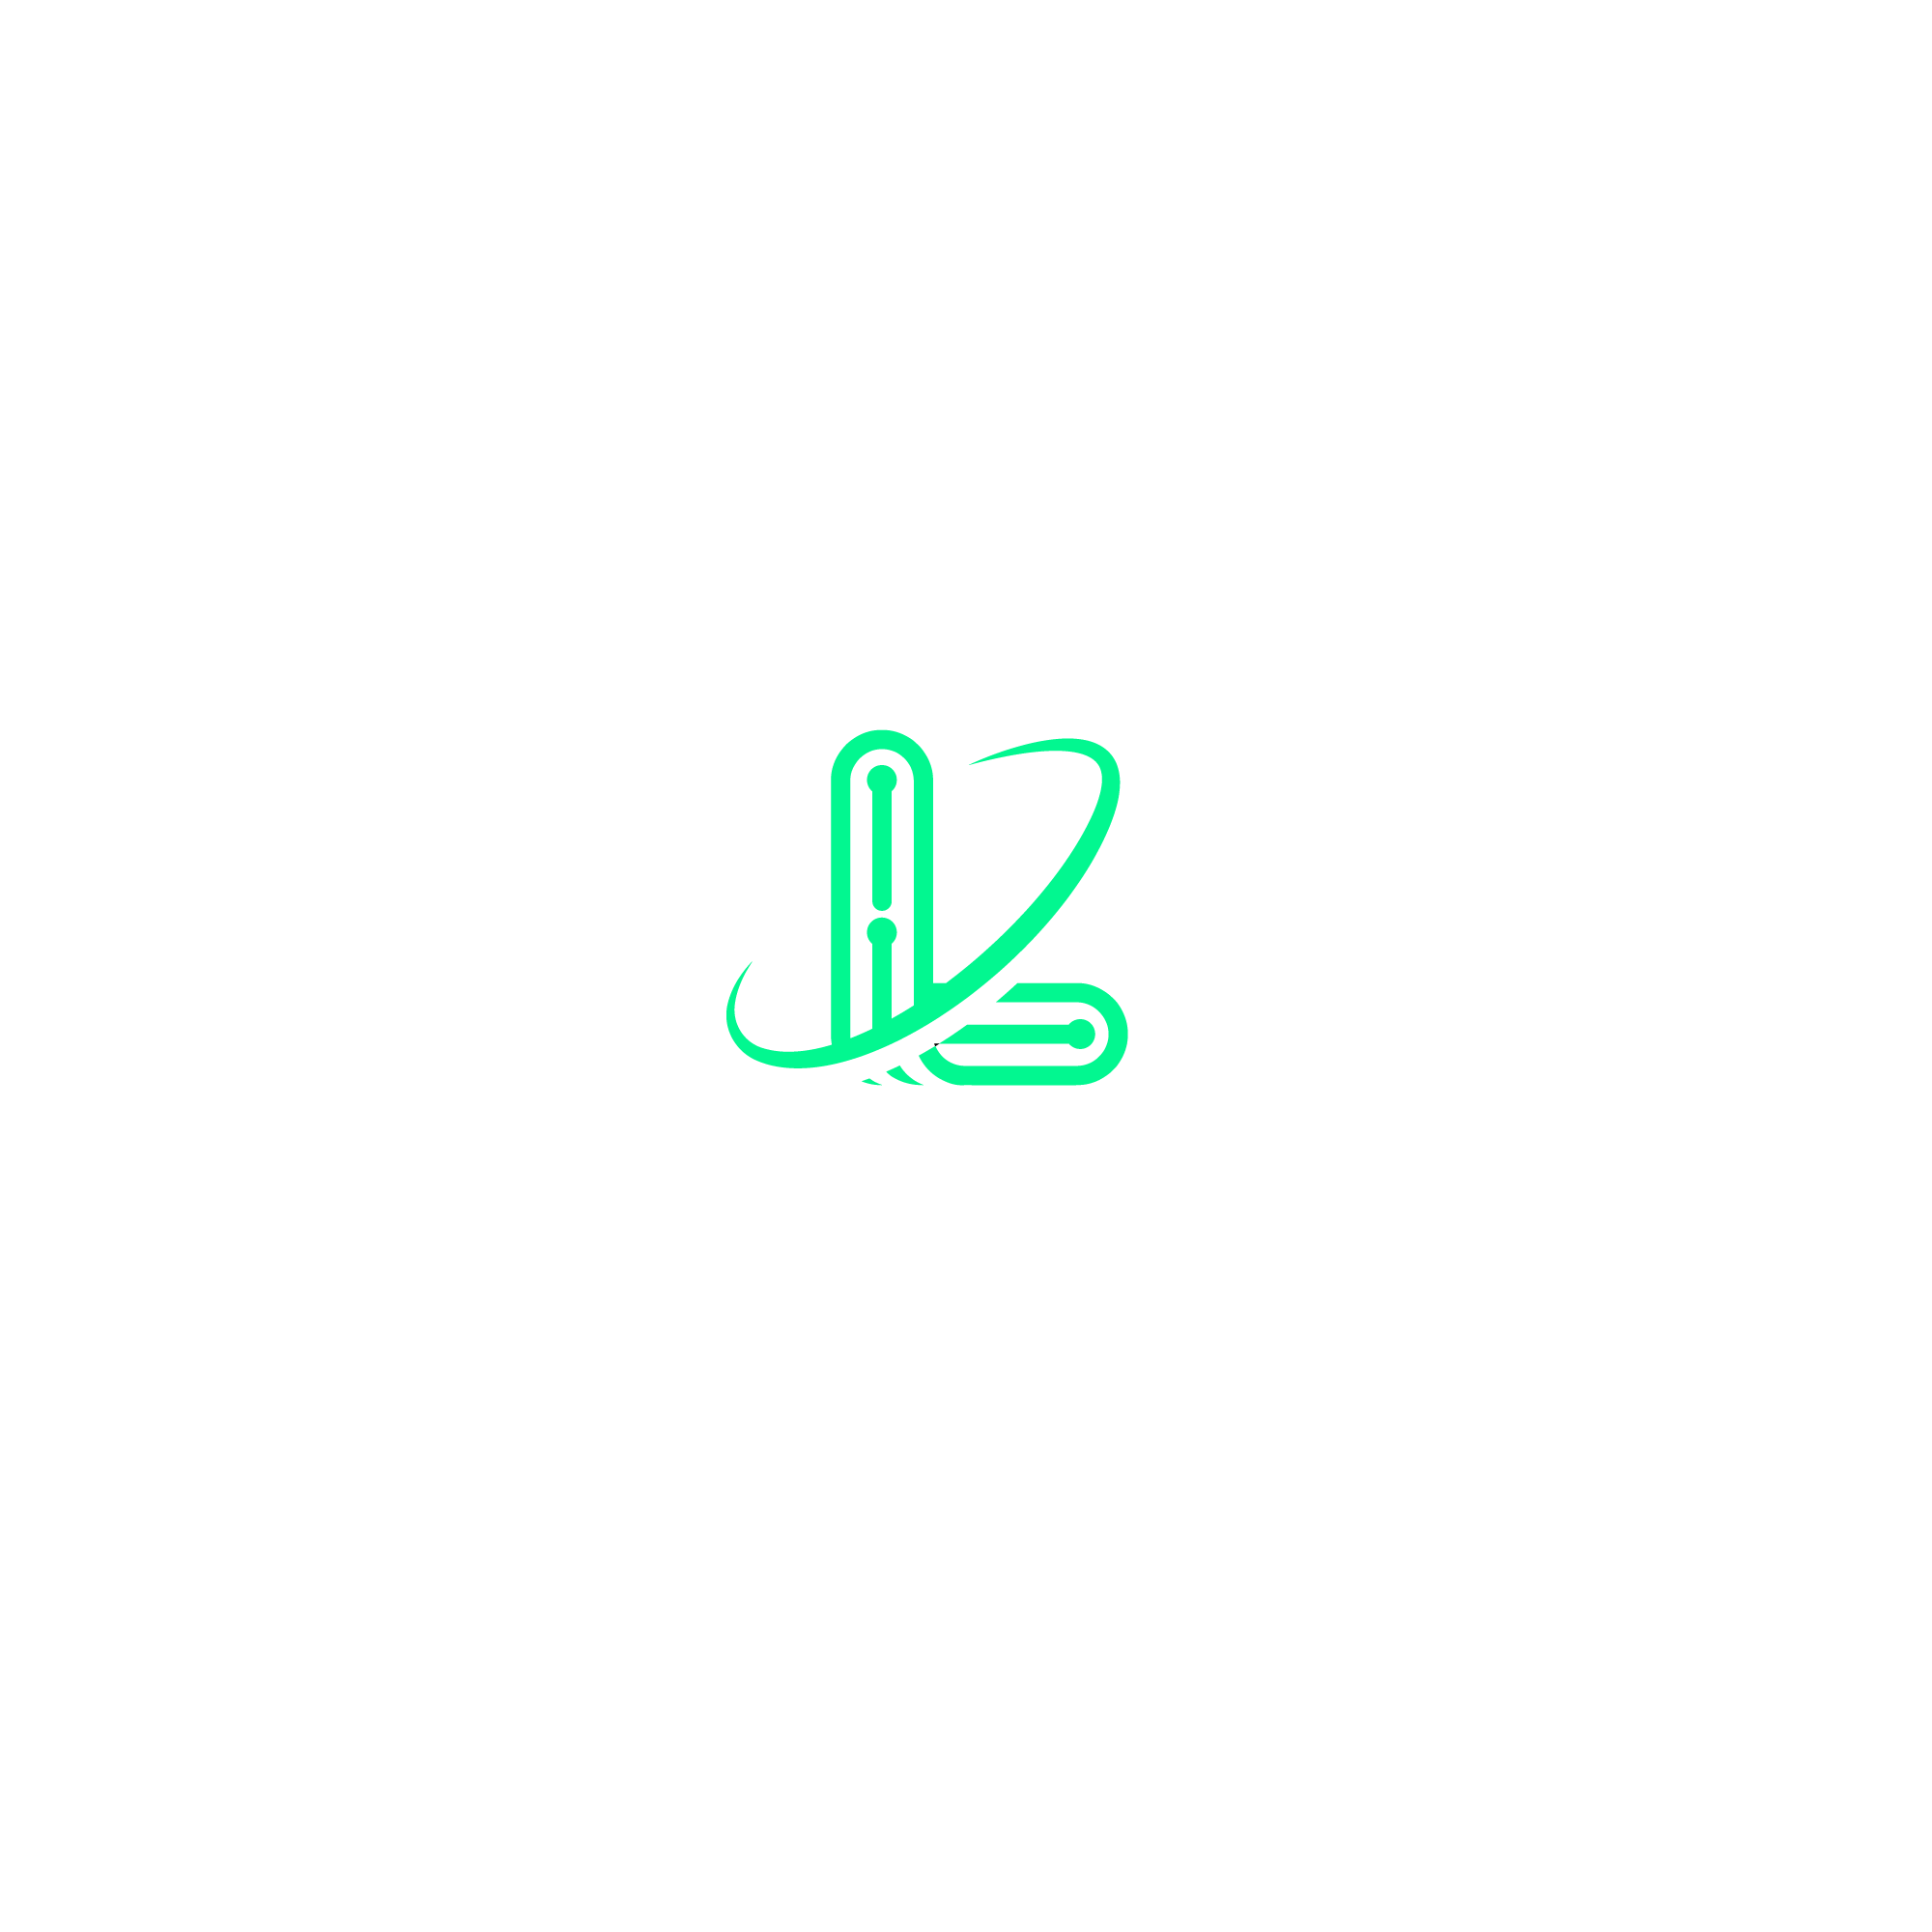 Bilder Leluma Systems